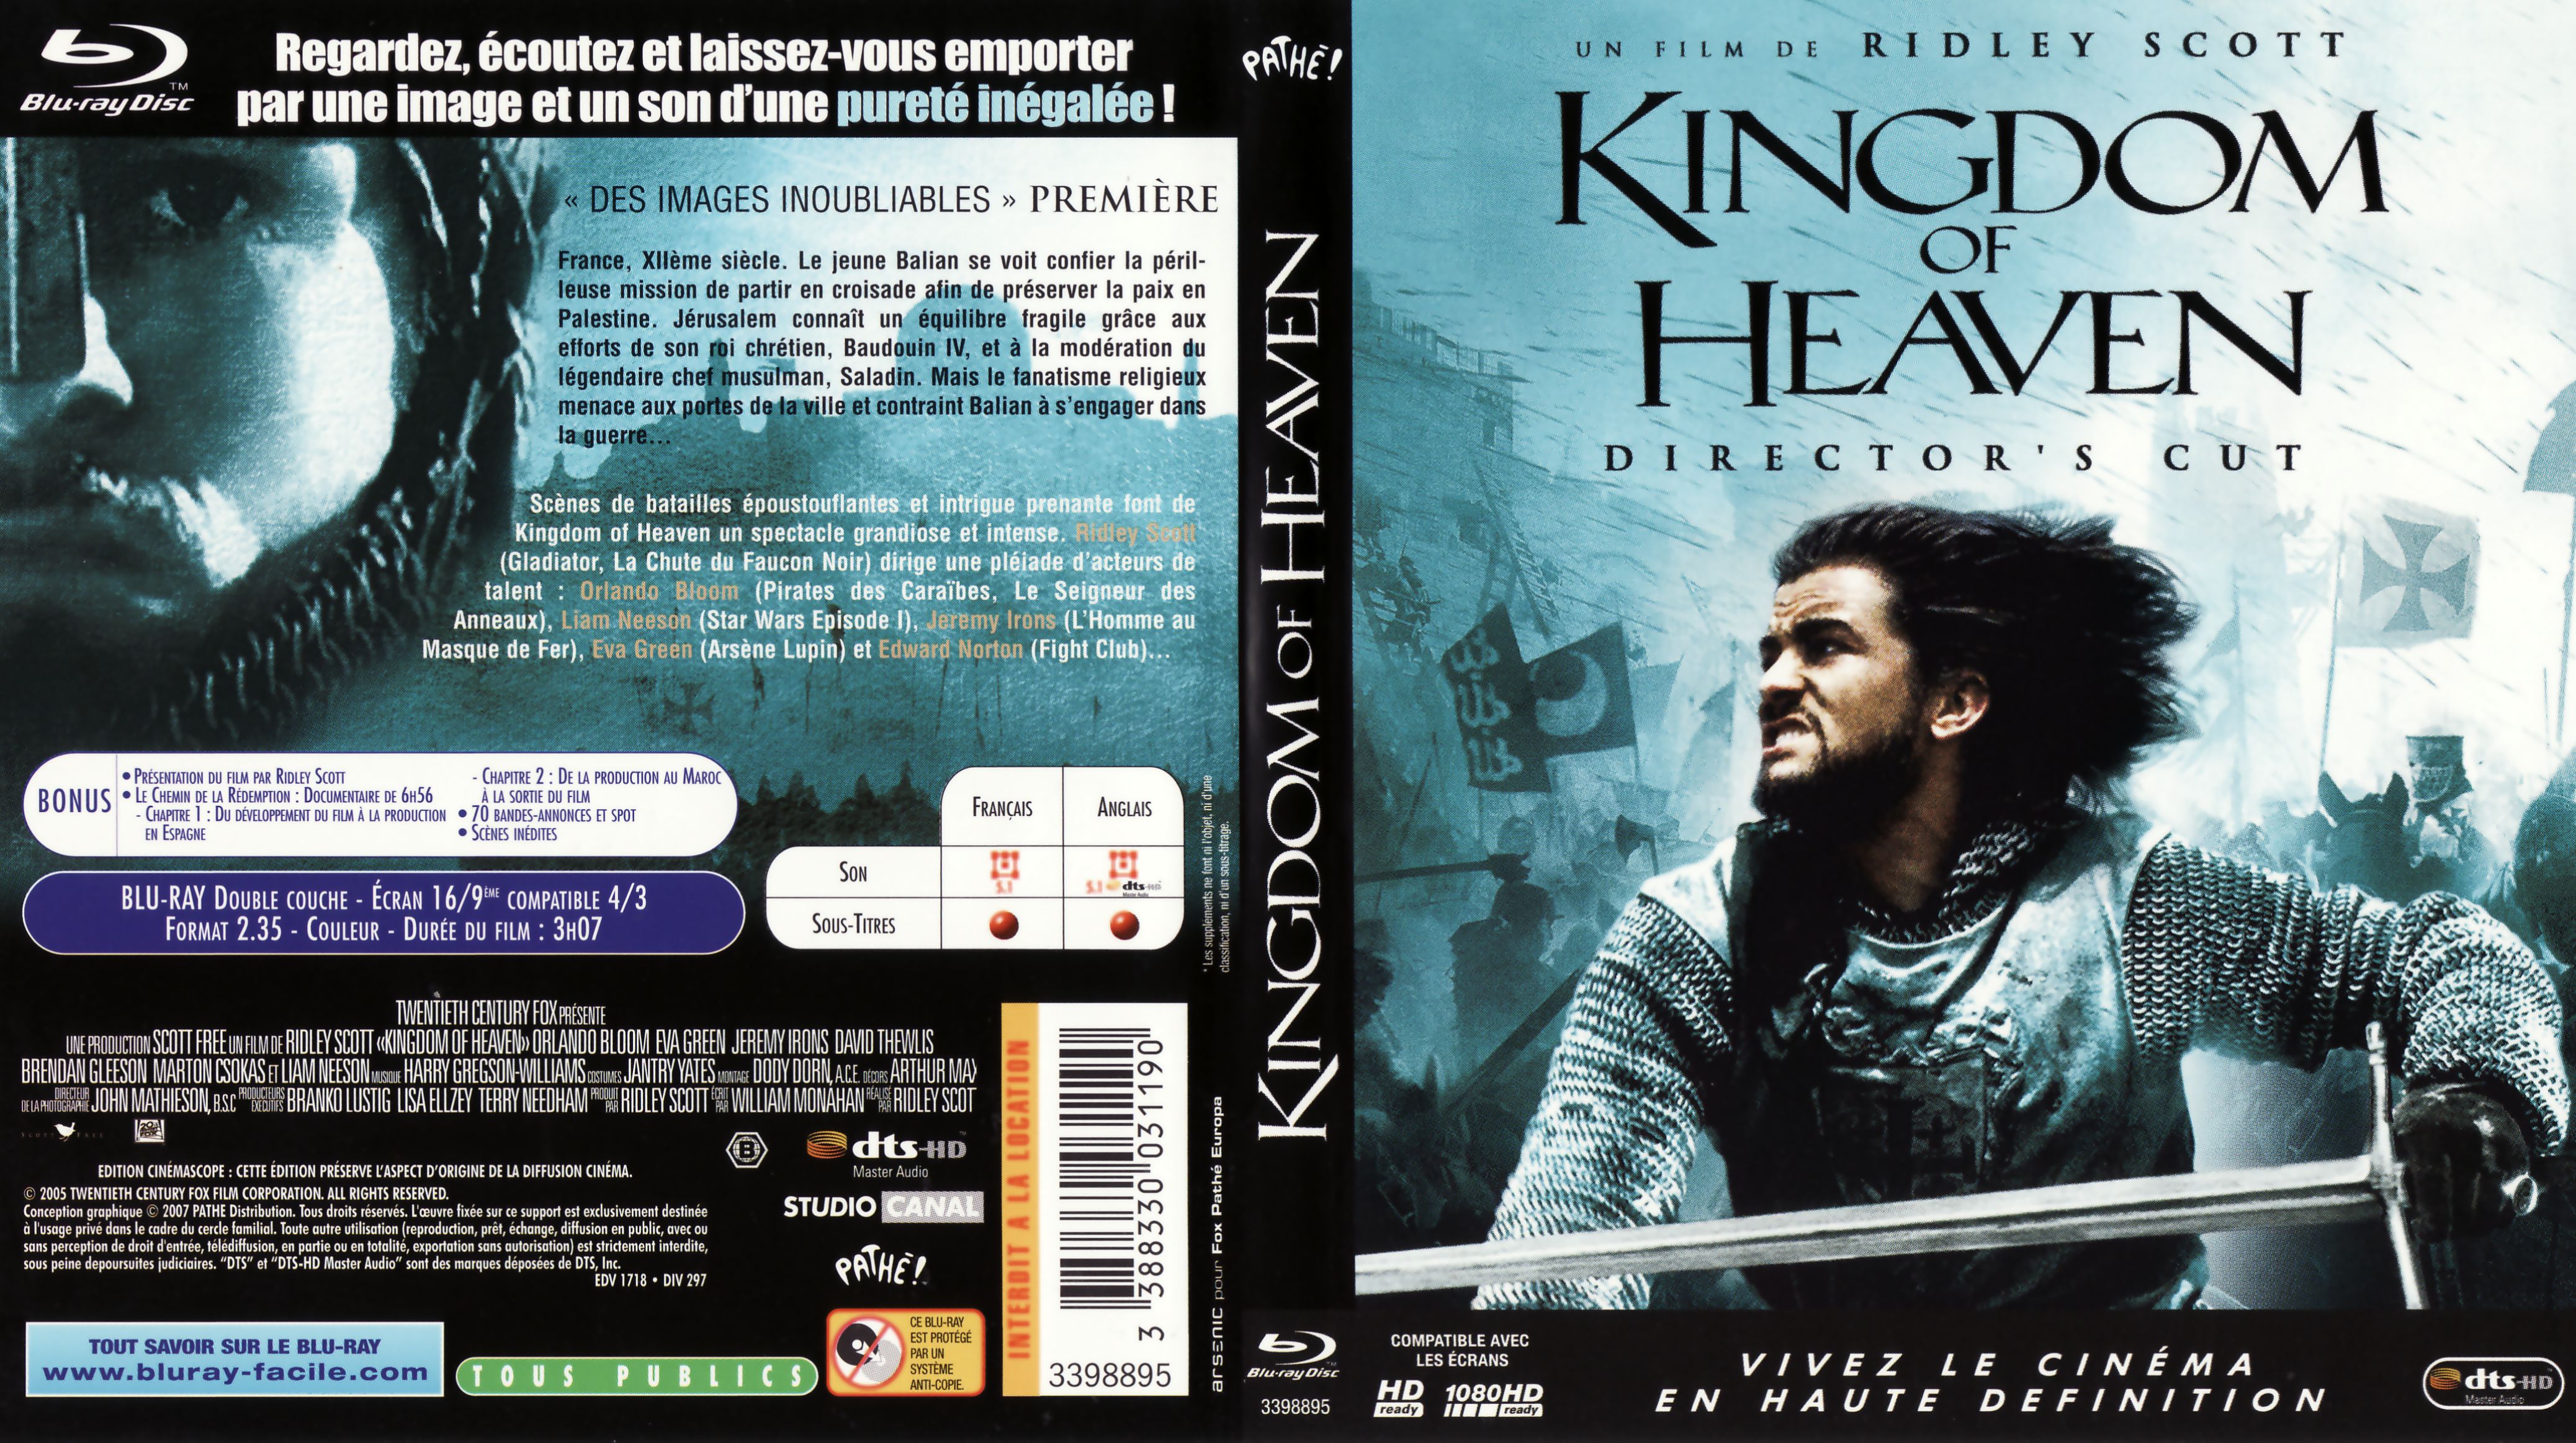 Jaquette DVD Kingdom of heaven (BLU-RAY)